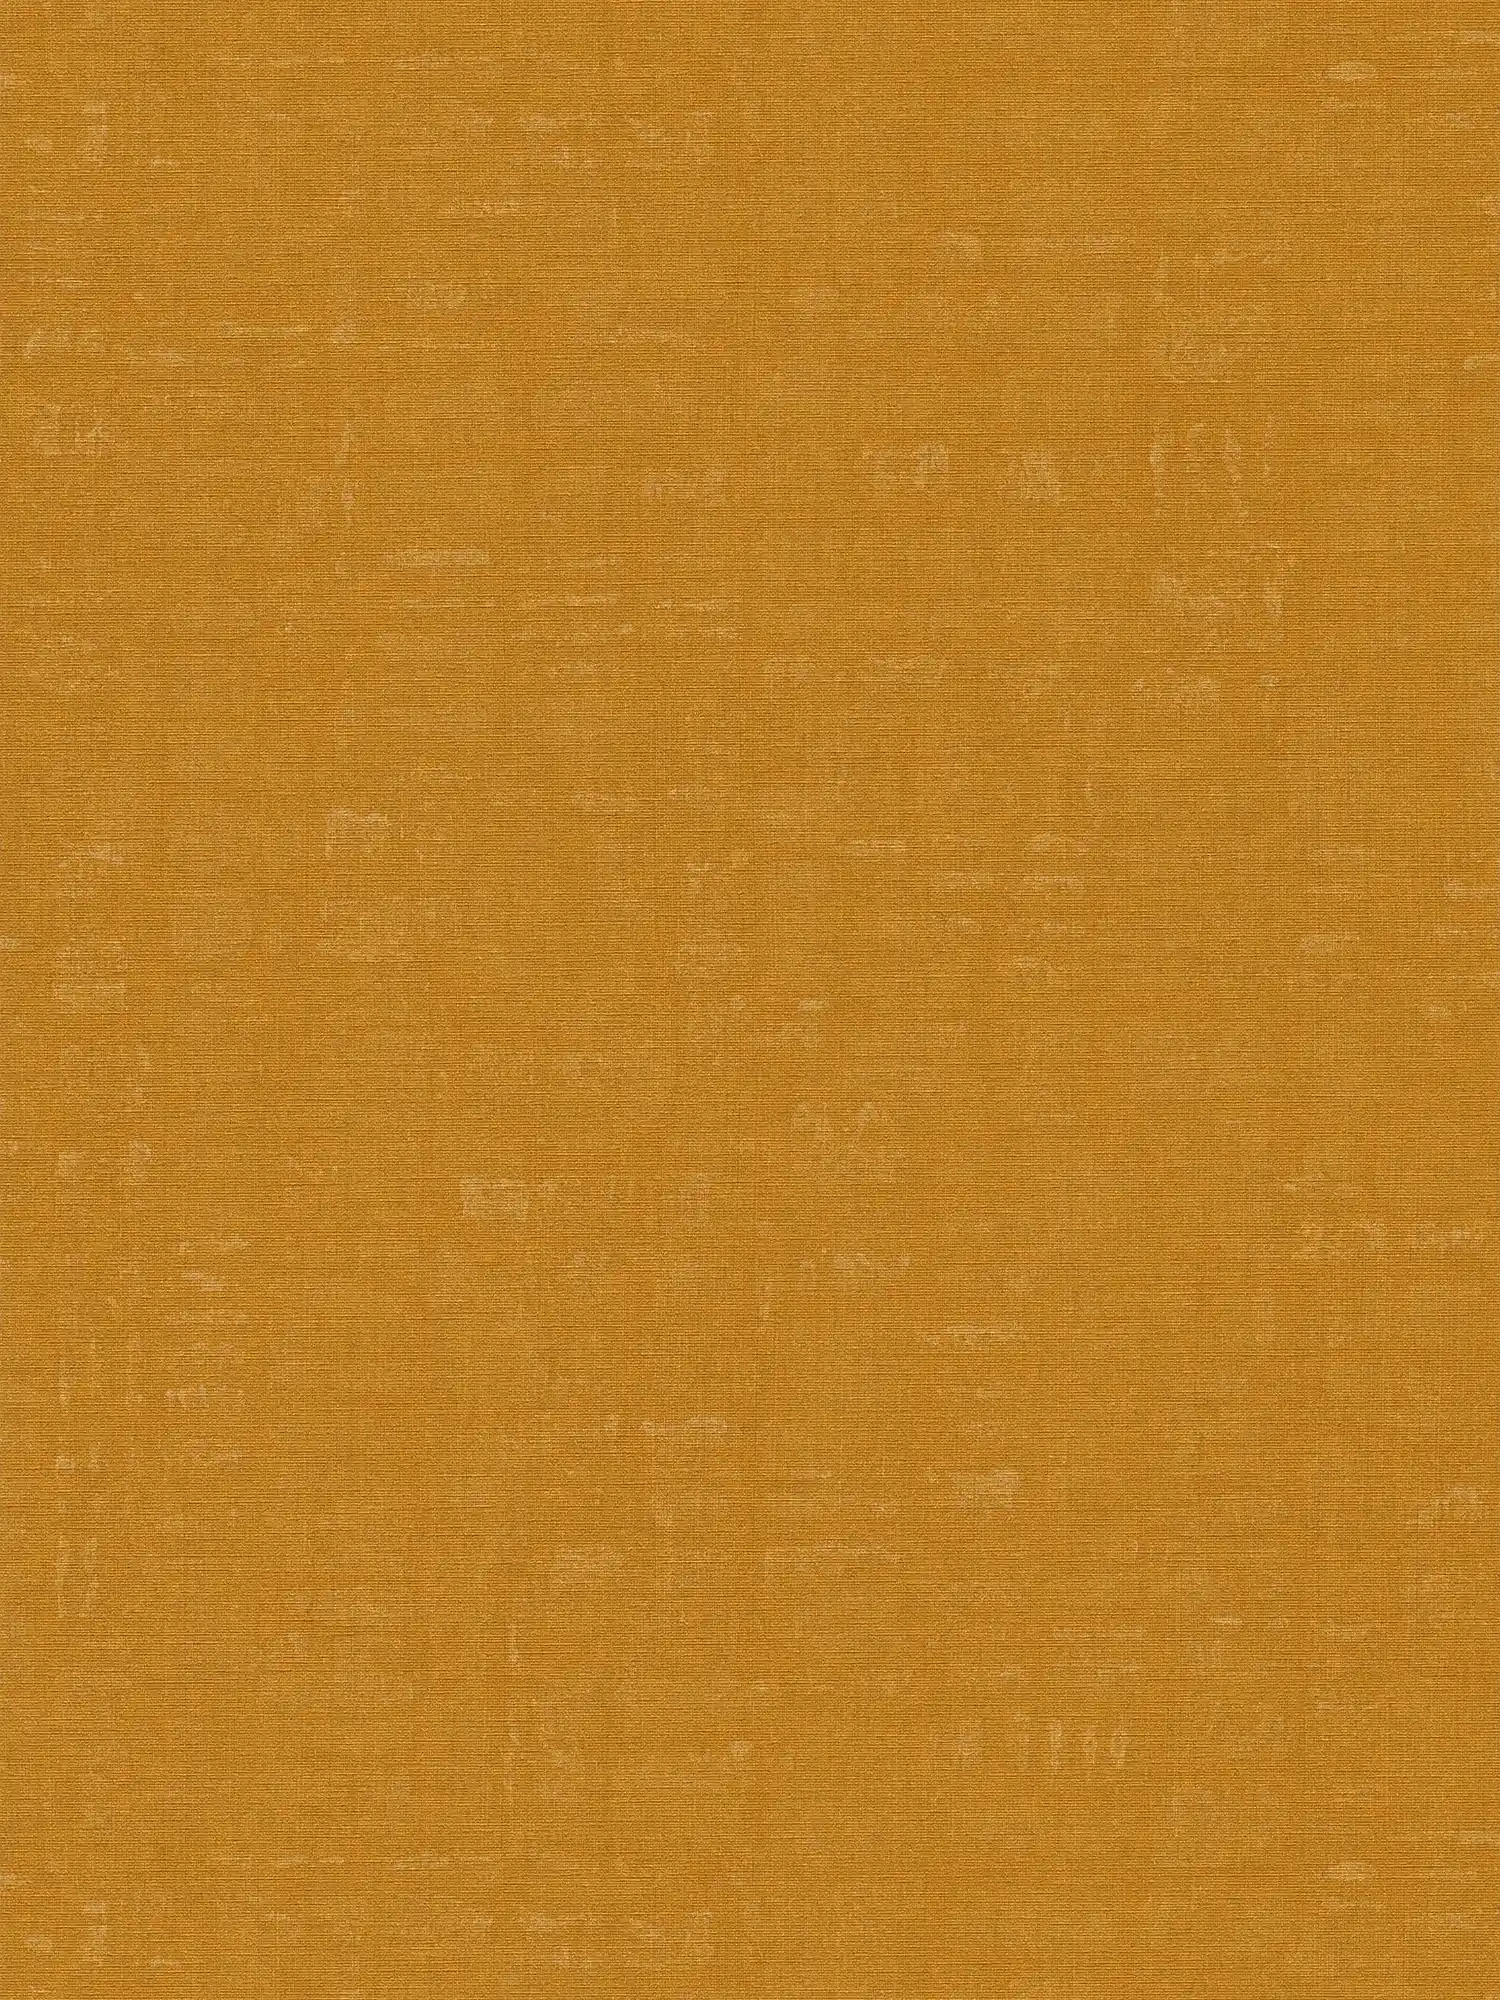 Papel pintado no tejido liso con efecto moteado - amarillo
